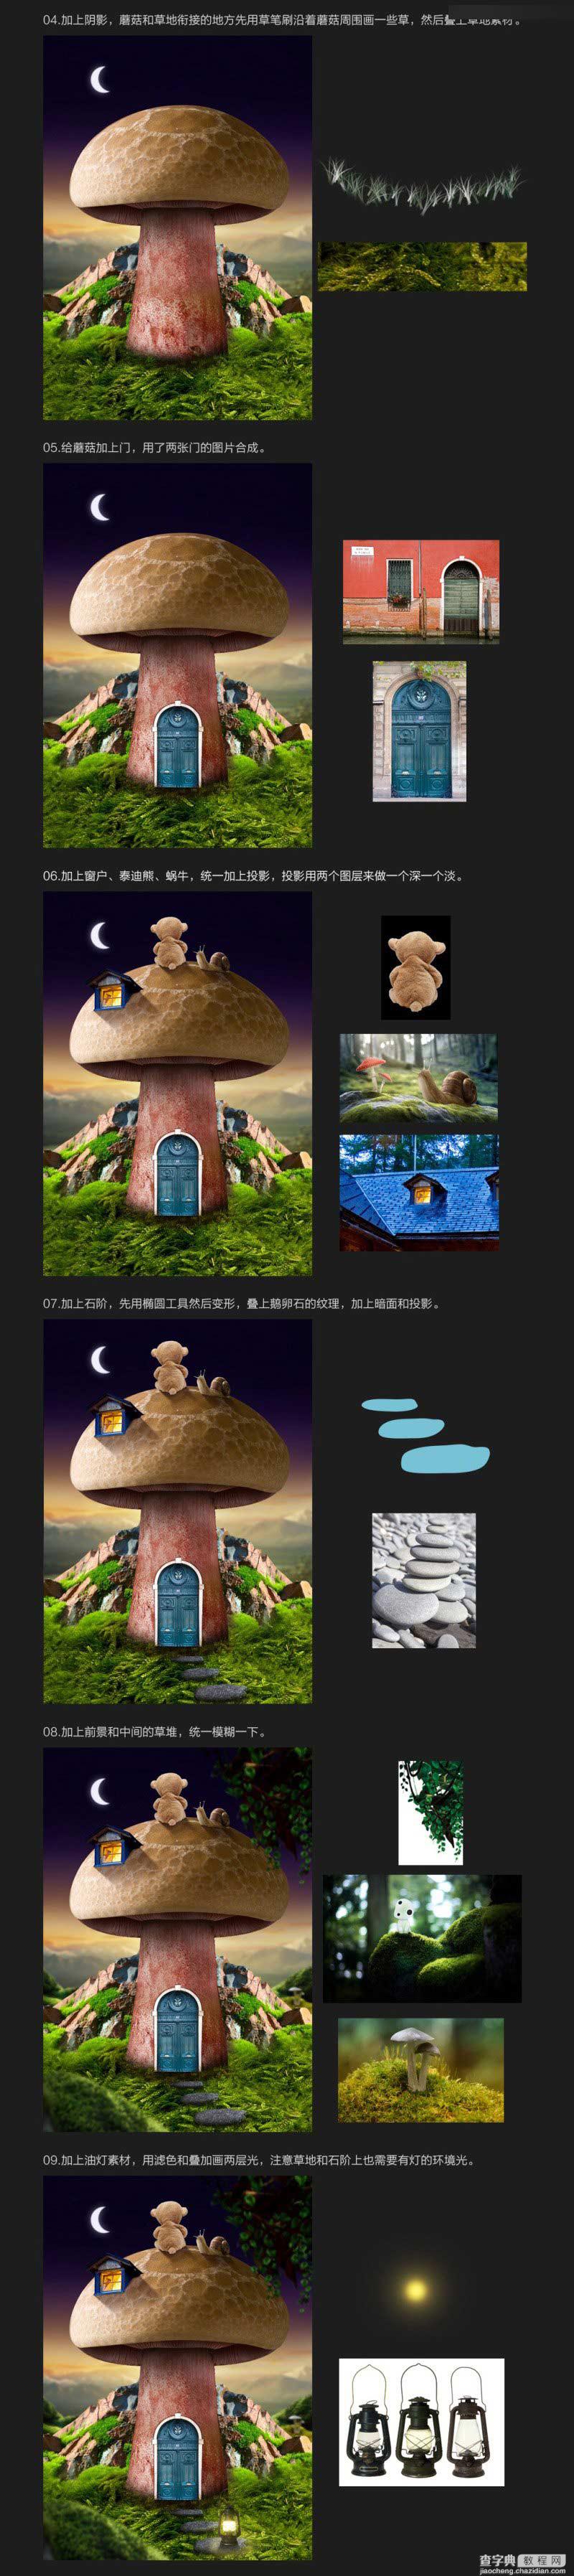 Photoshop图片合成梦幻童话风格的蘑菇房创意海报4